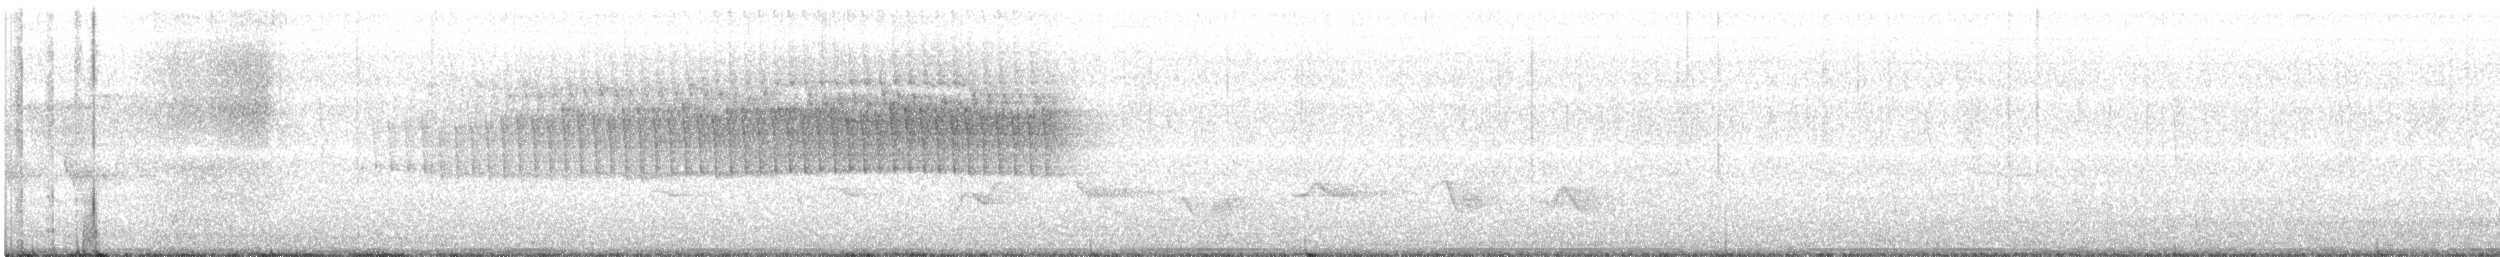 Paruline vermivore - ML163620171